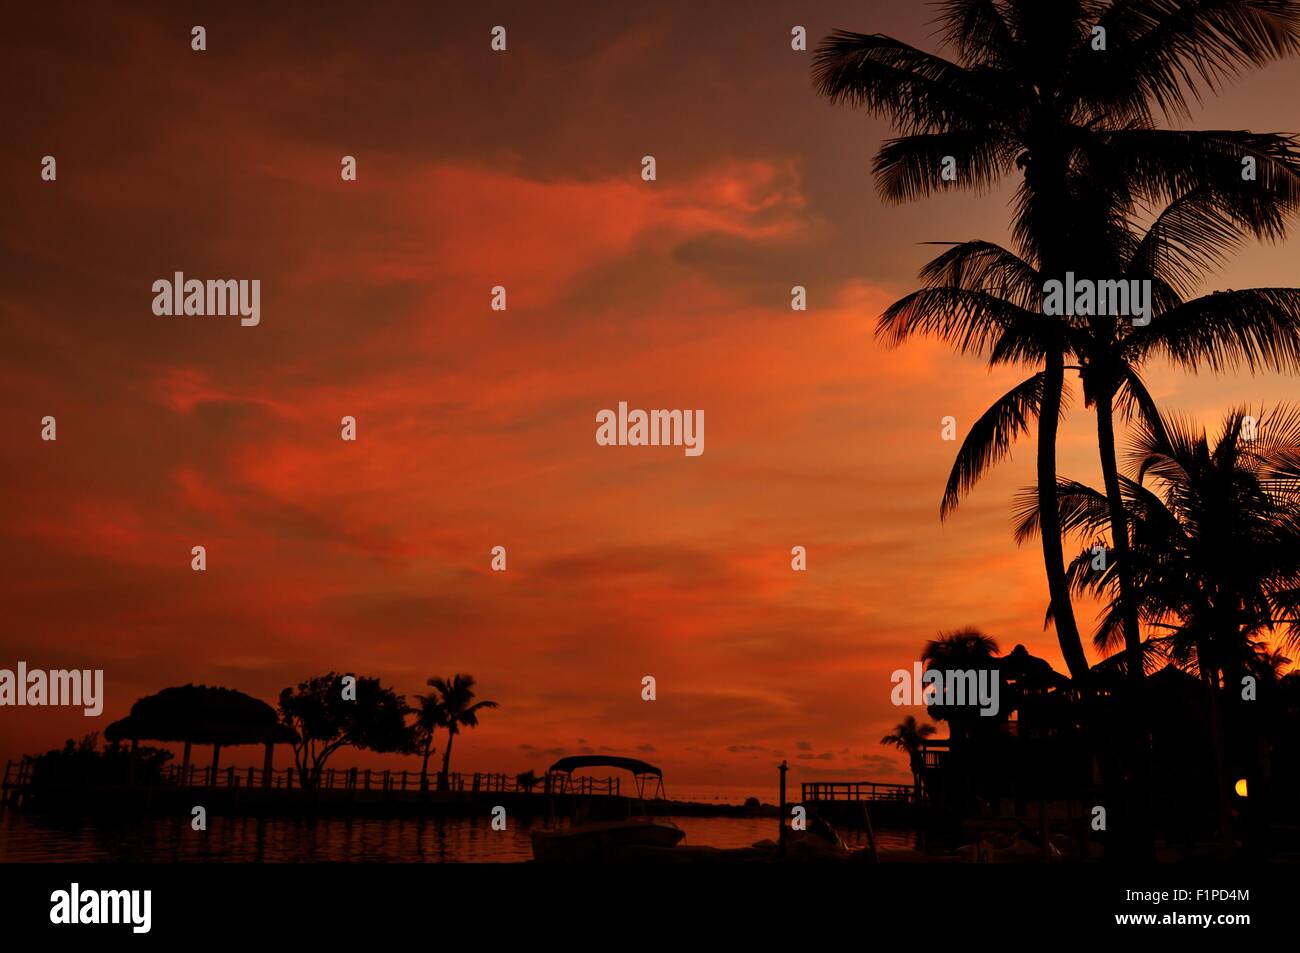 Tramonto tropicale - Orange Sky, Oceano Atlantico e palme. Rilassante tema tropicale Foto Stock